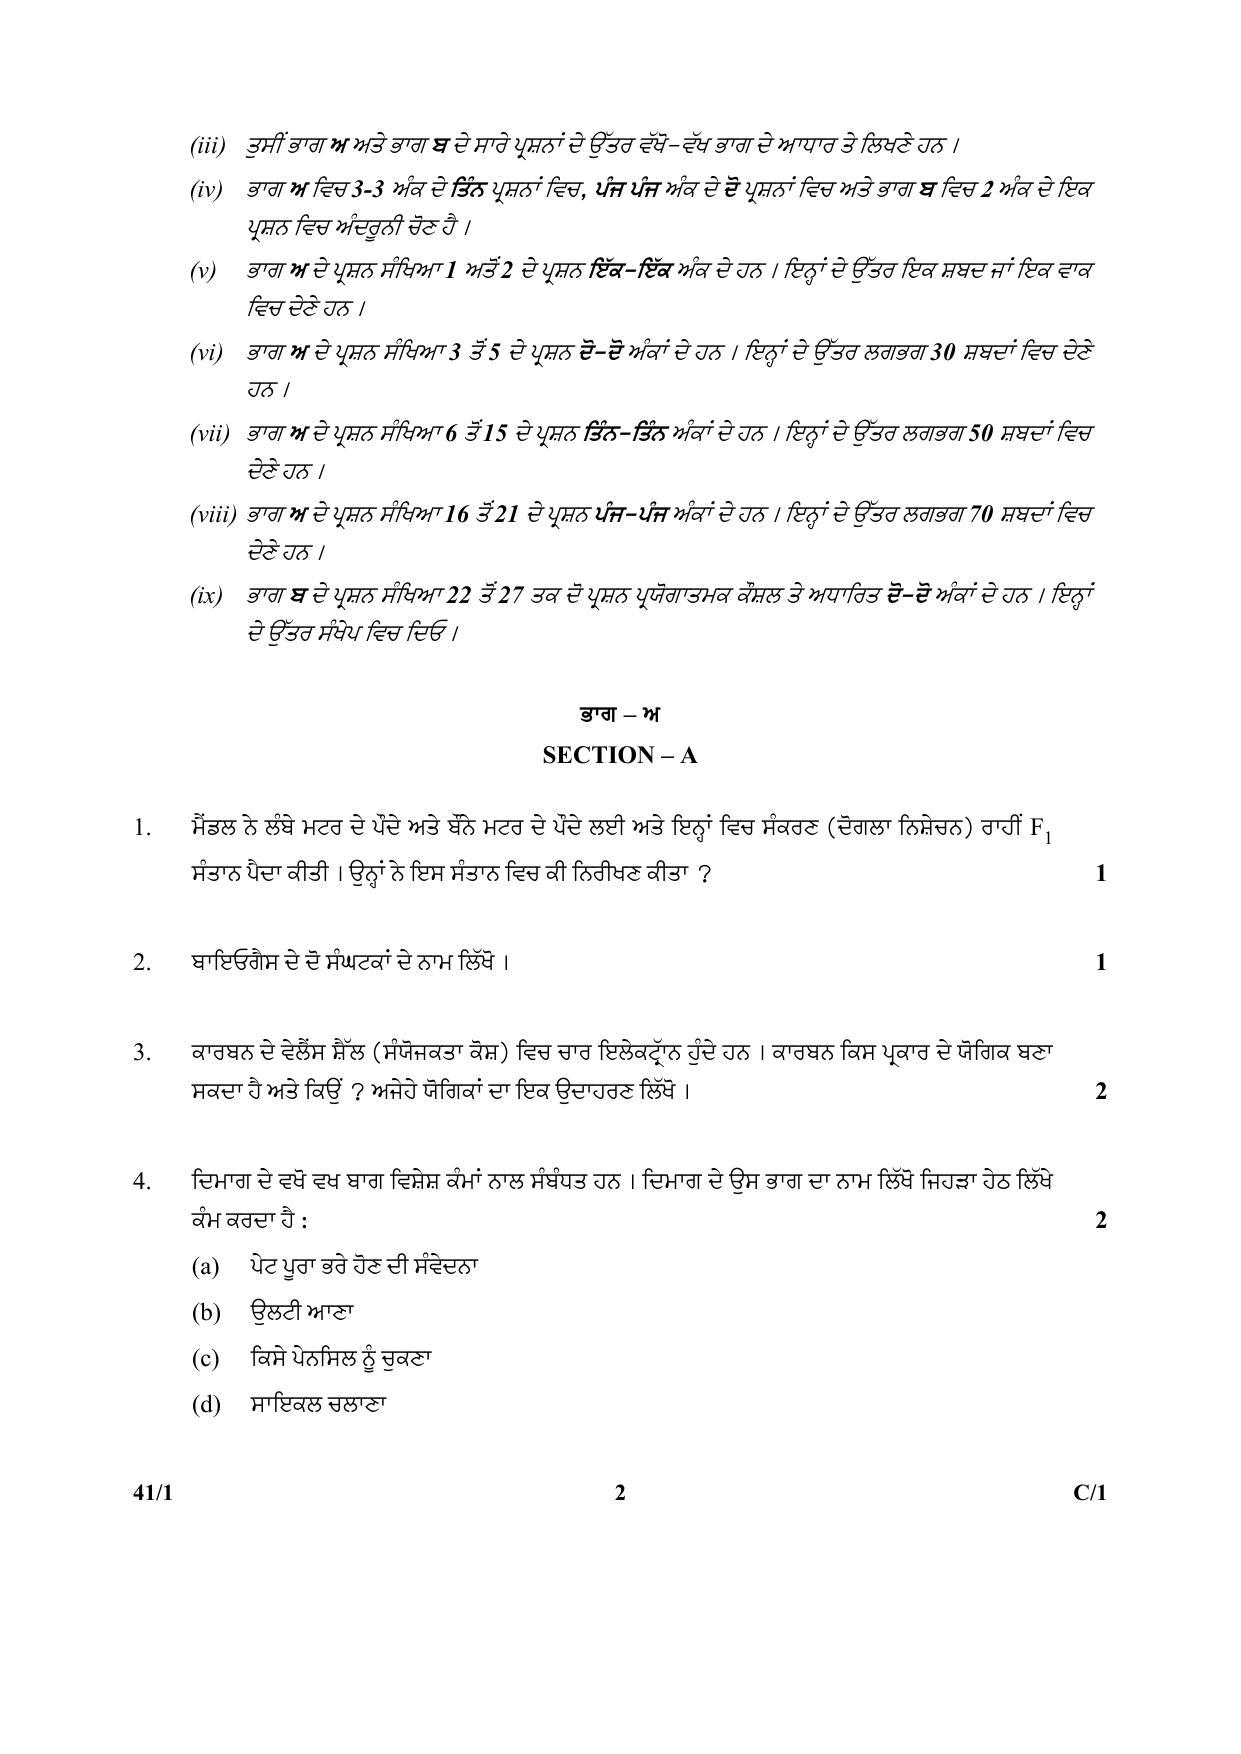 CBSE Class 10 41-1 Science PUNJABI VERSION 2018 Compartment Question Paper - Page 2